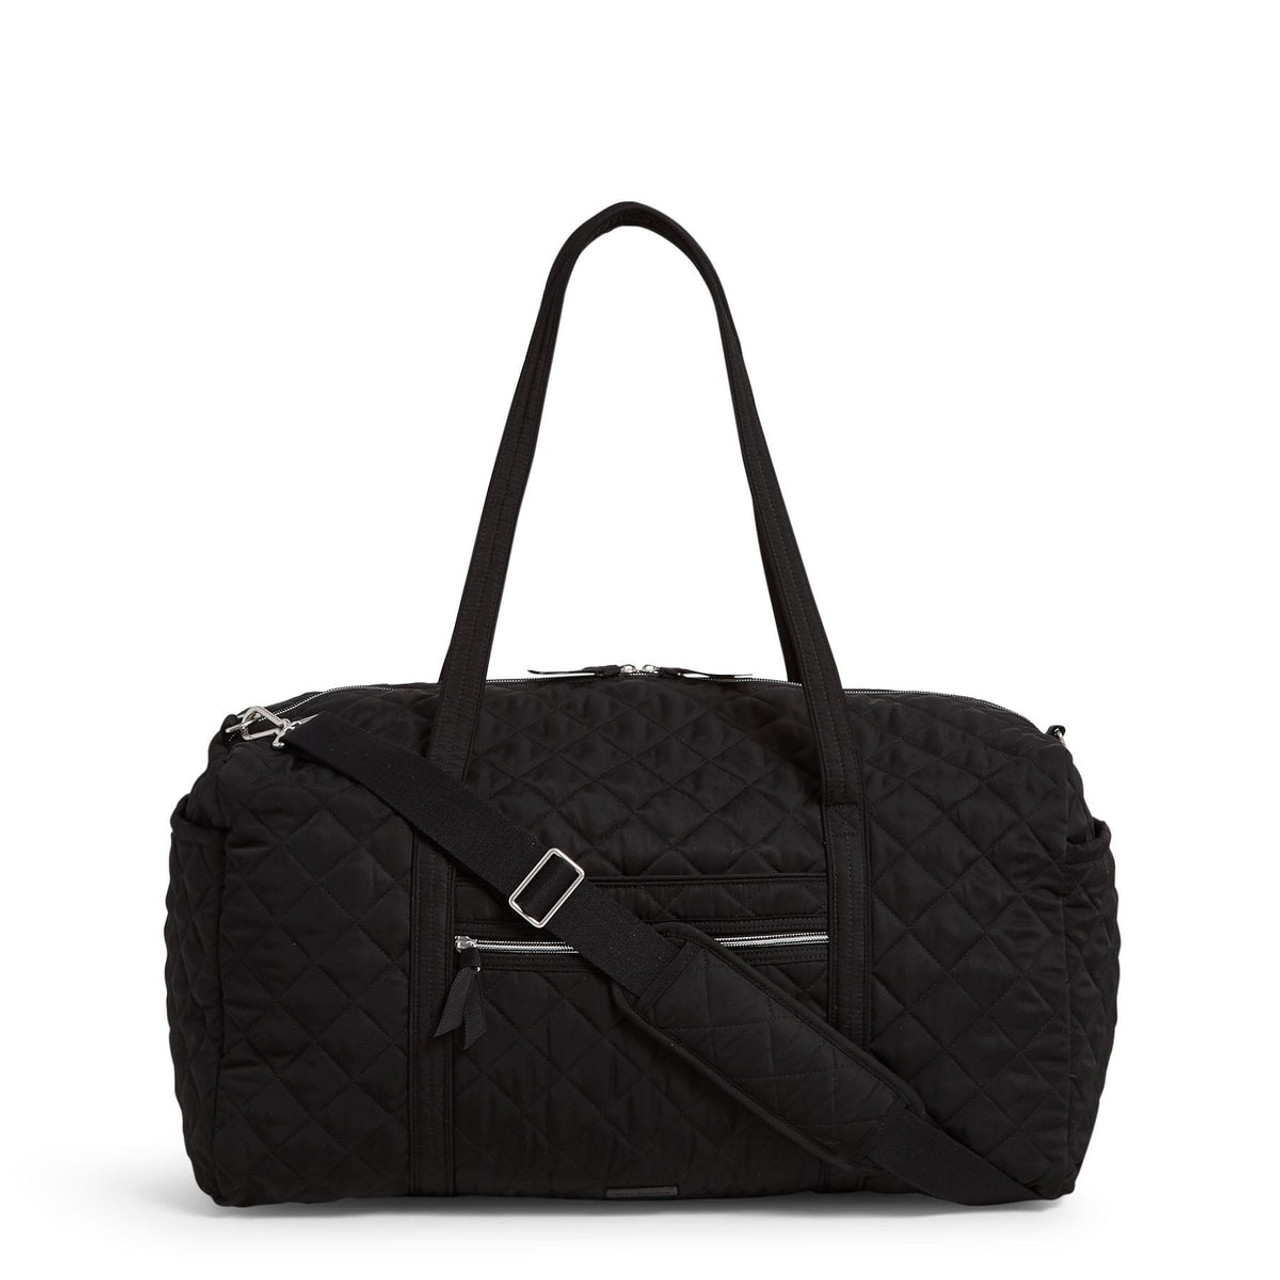 Vera Bradley | Bags | Black Quilted Vera Bradley Shoulder Bag | Poshmark